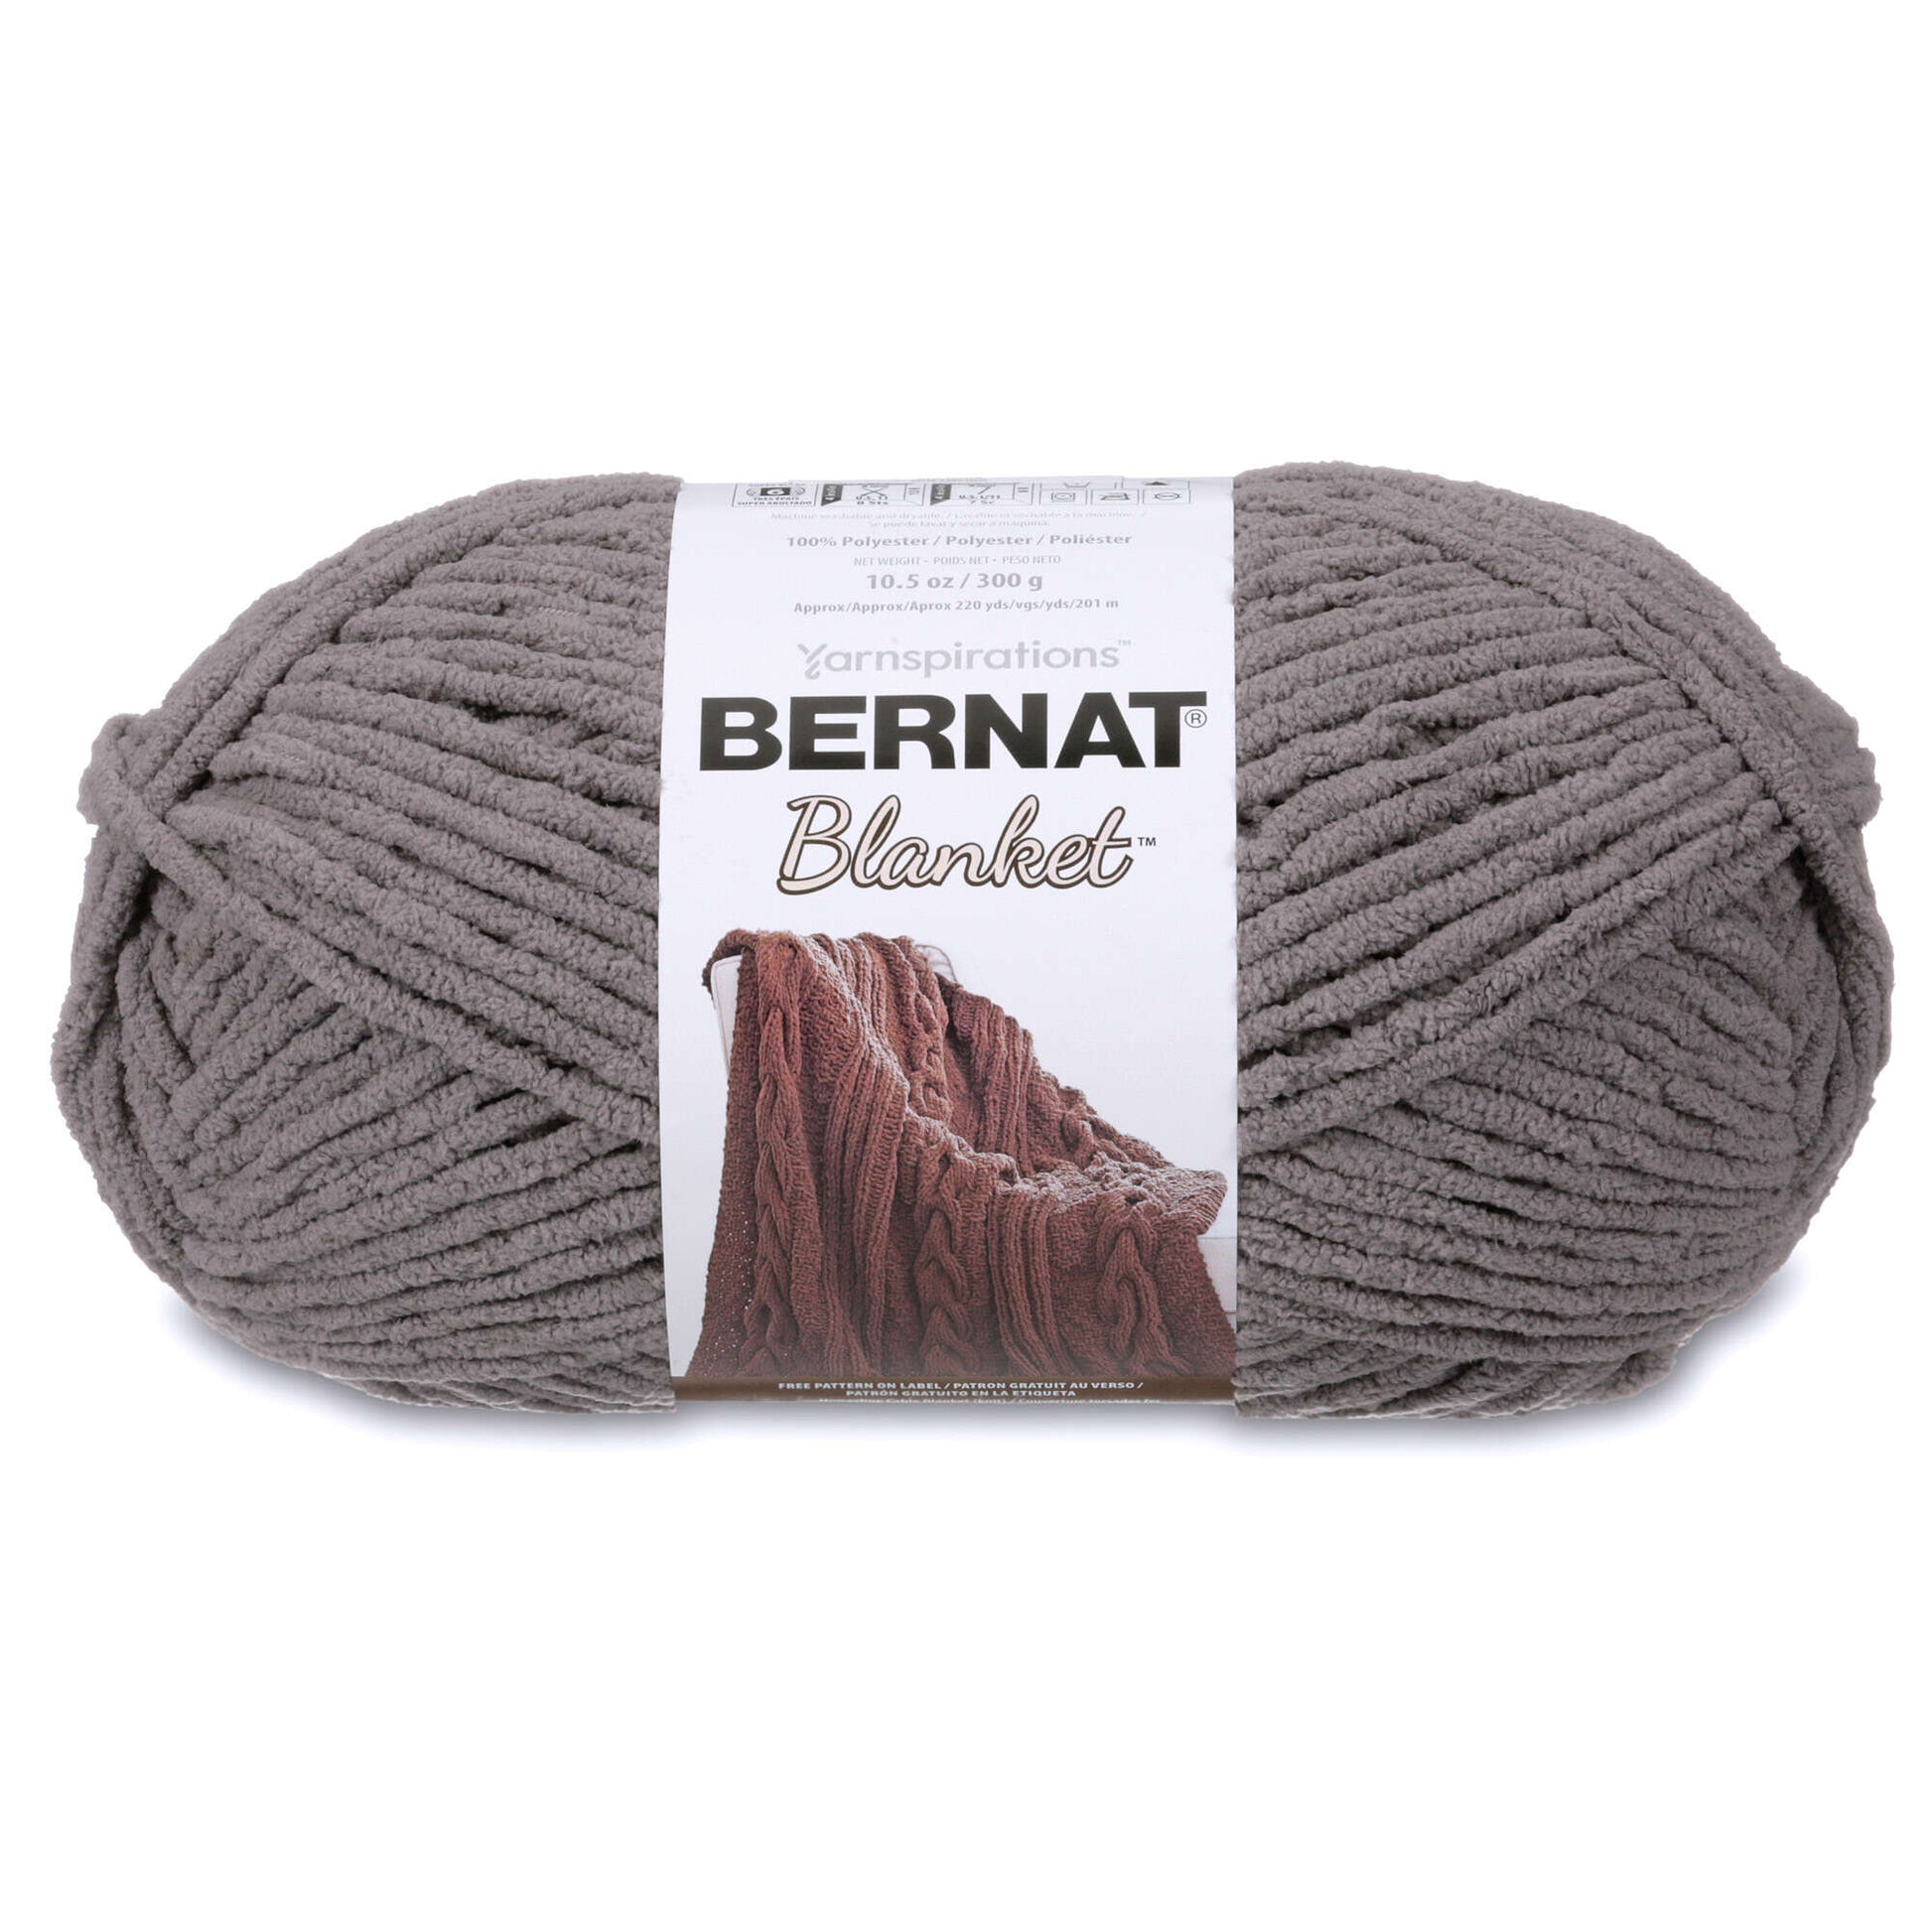 Bernat Blanket Yarn (300g/10.5oz) Dark Gray